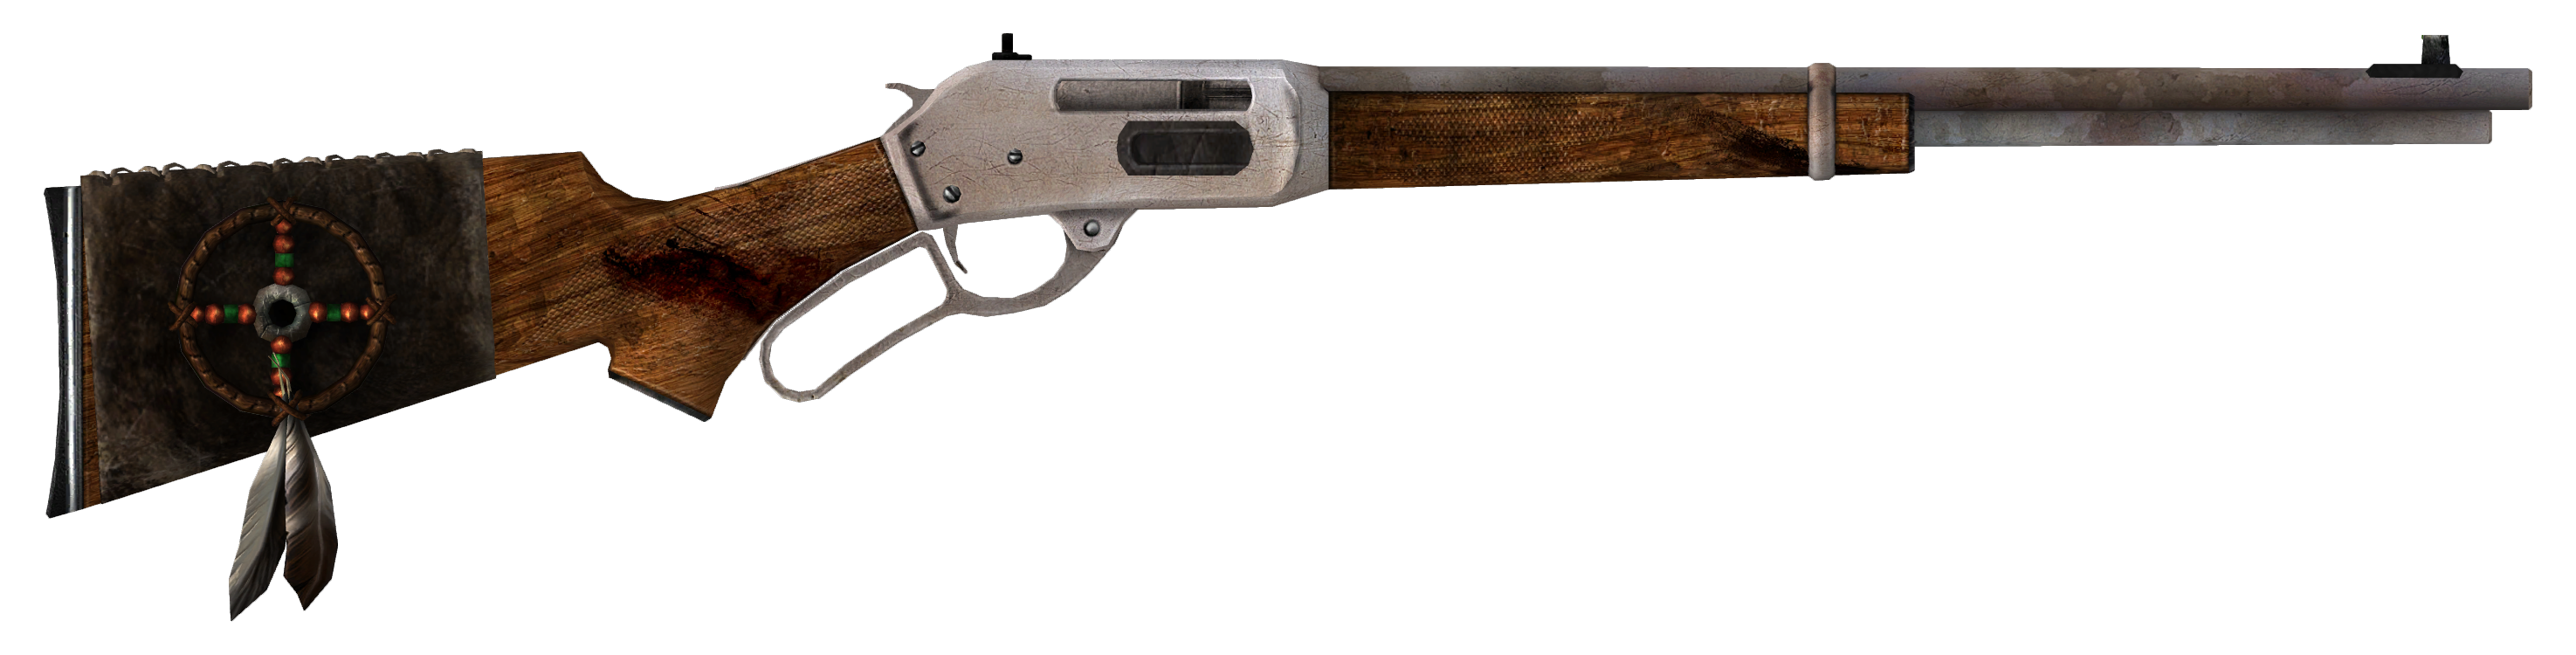 new vegas brush gun